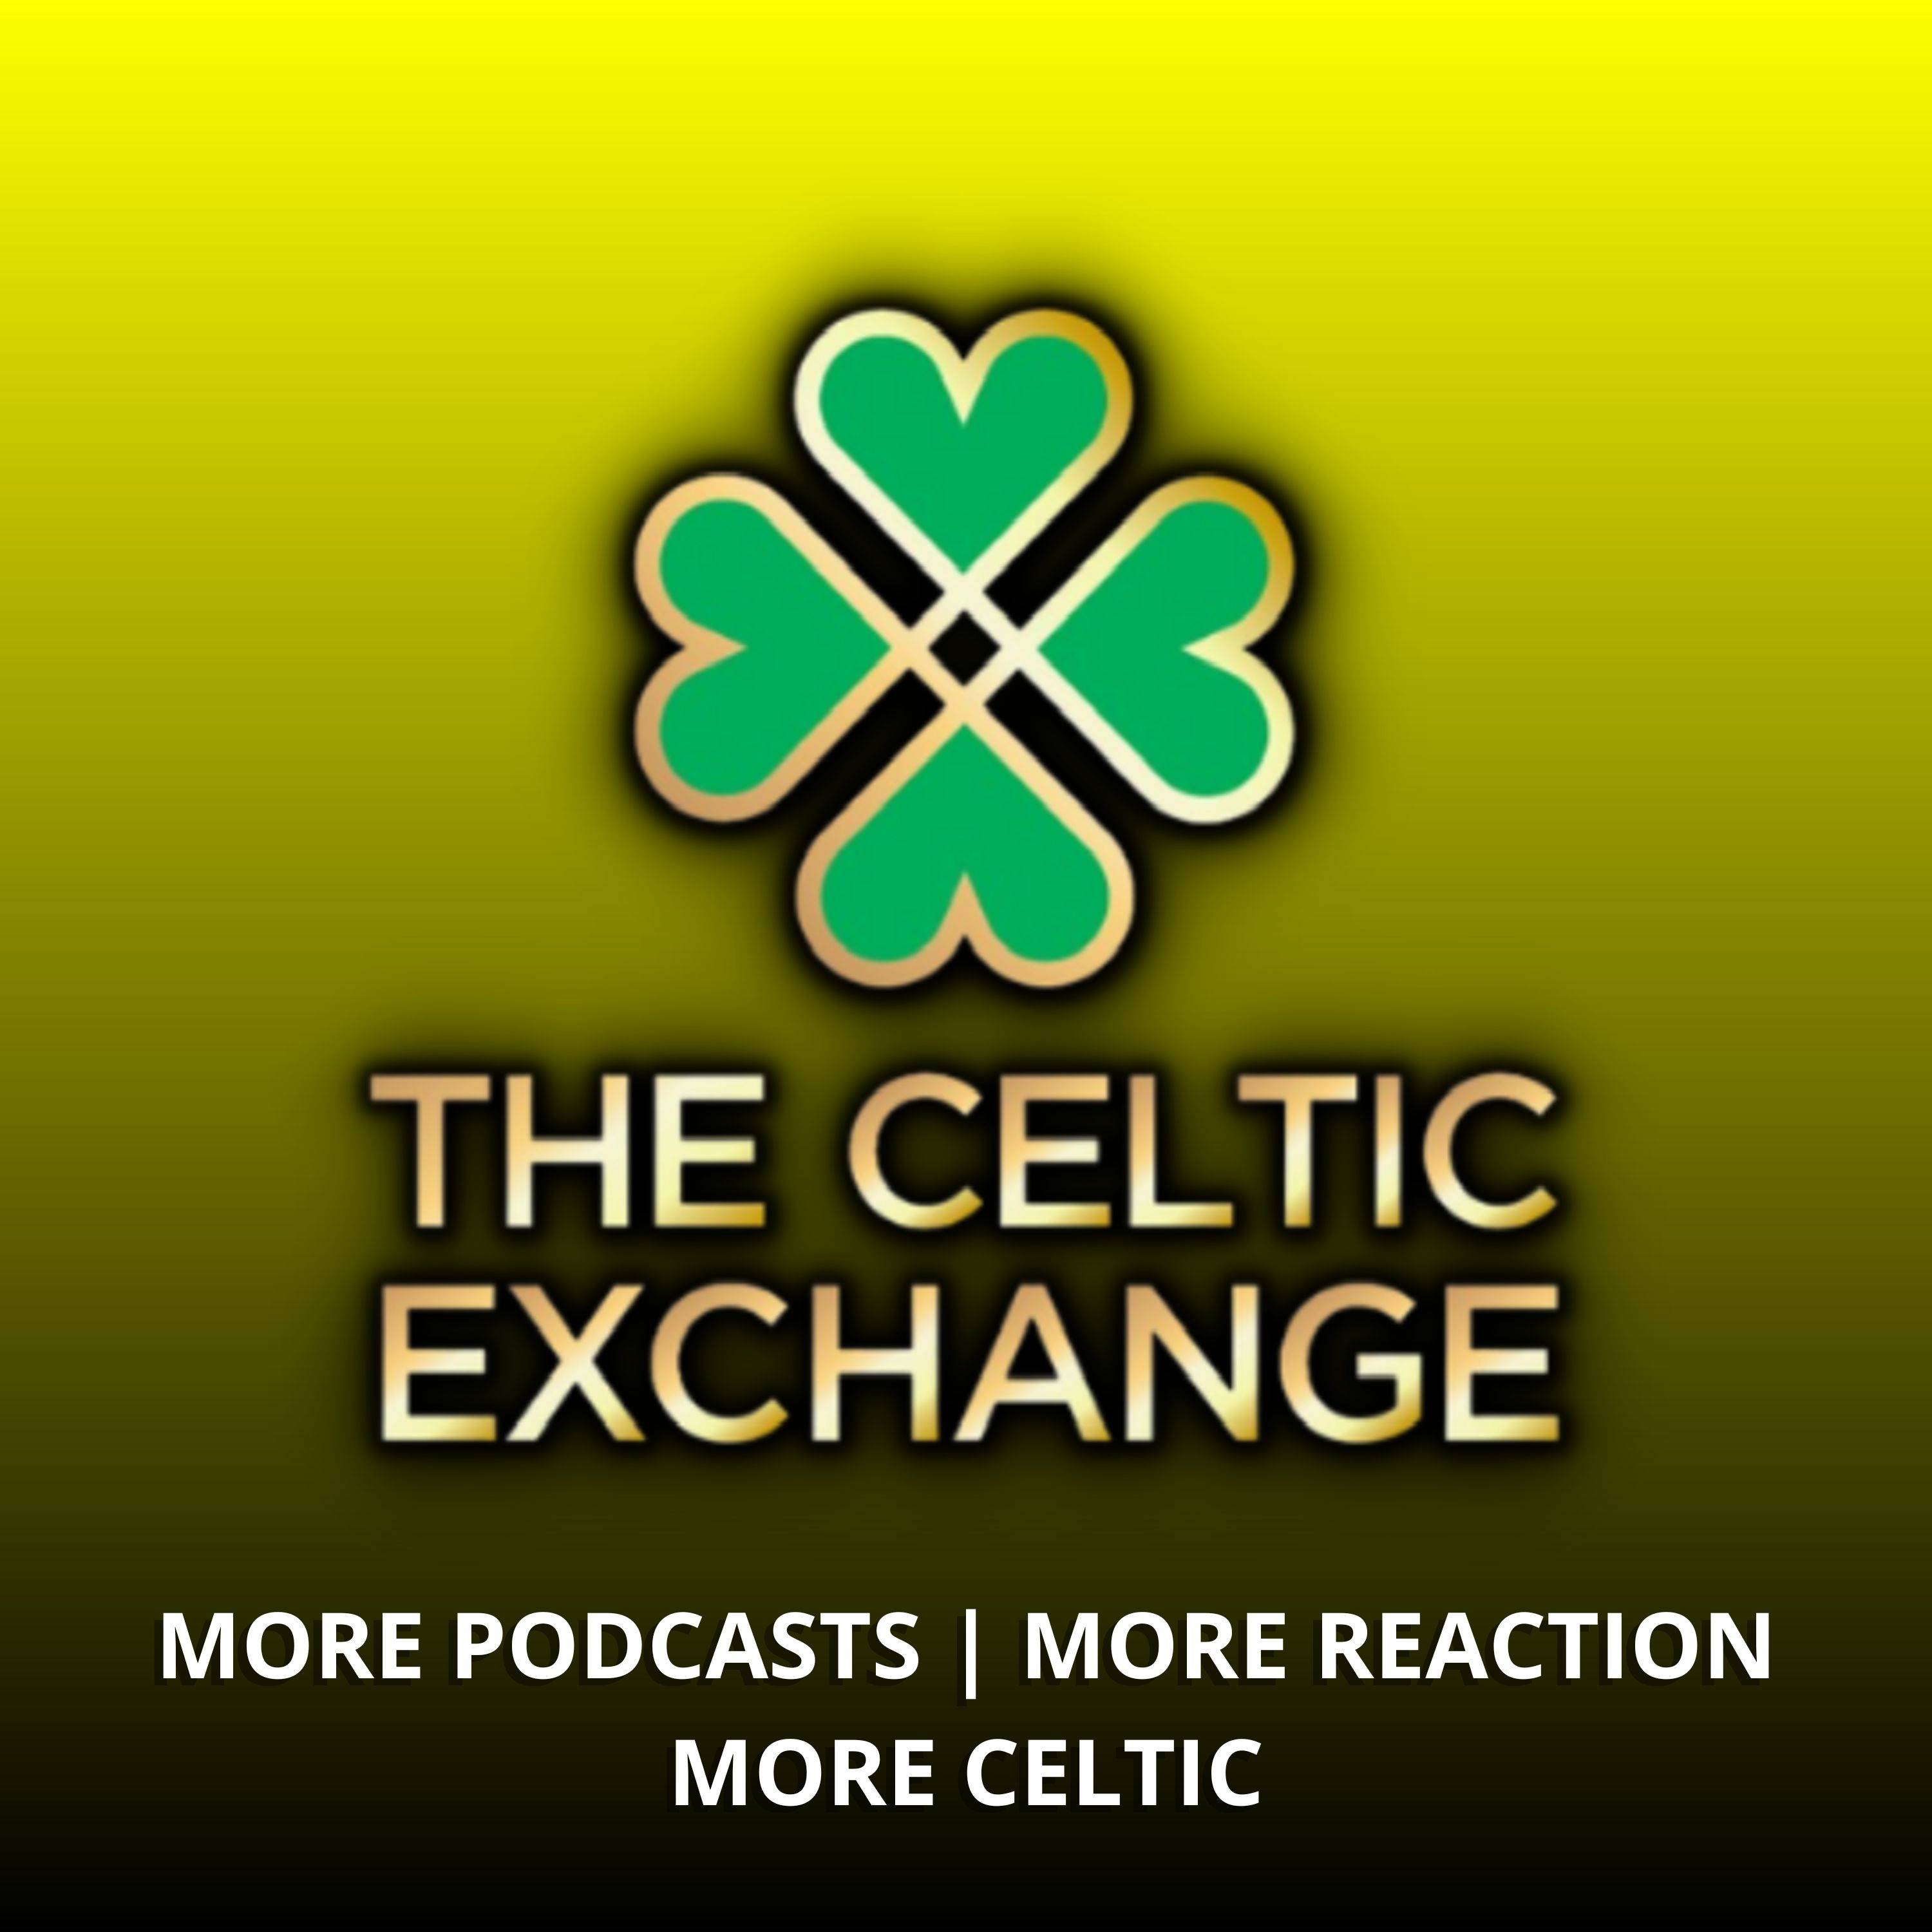 Countdown To Kick-Off: Celtic Chasing Capital Gains On Midweek Trip To Edinburgh